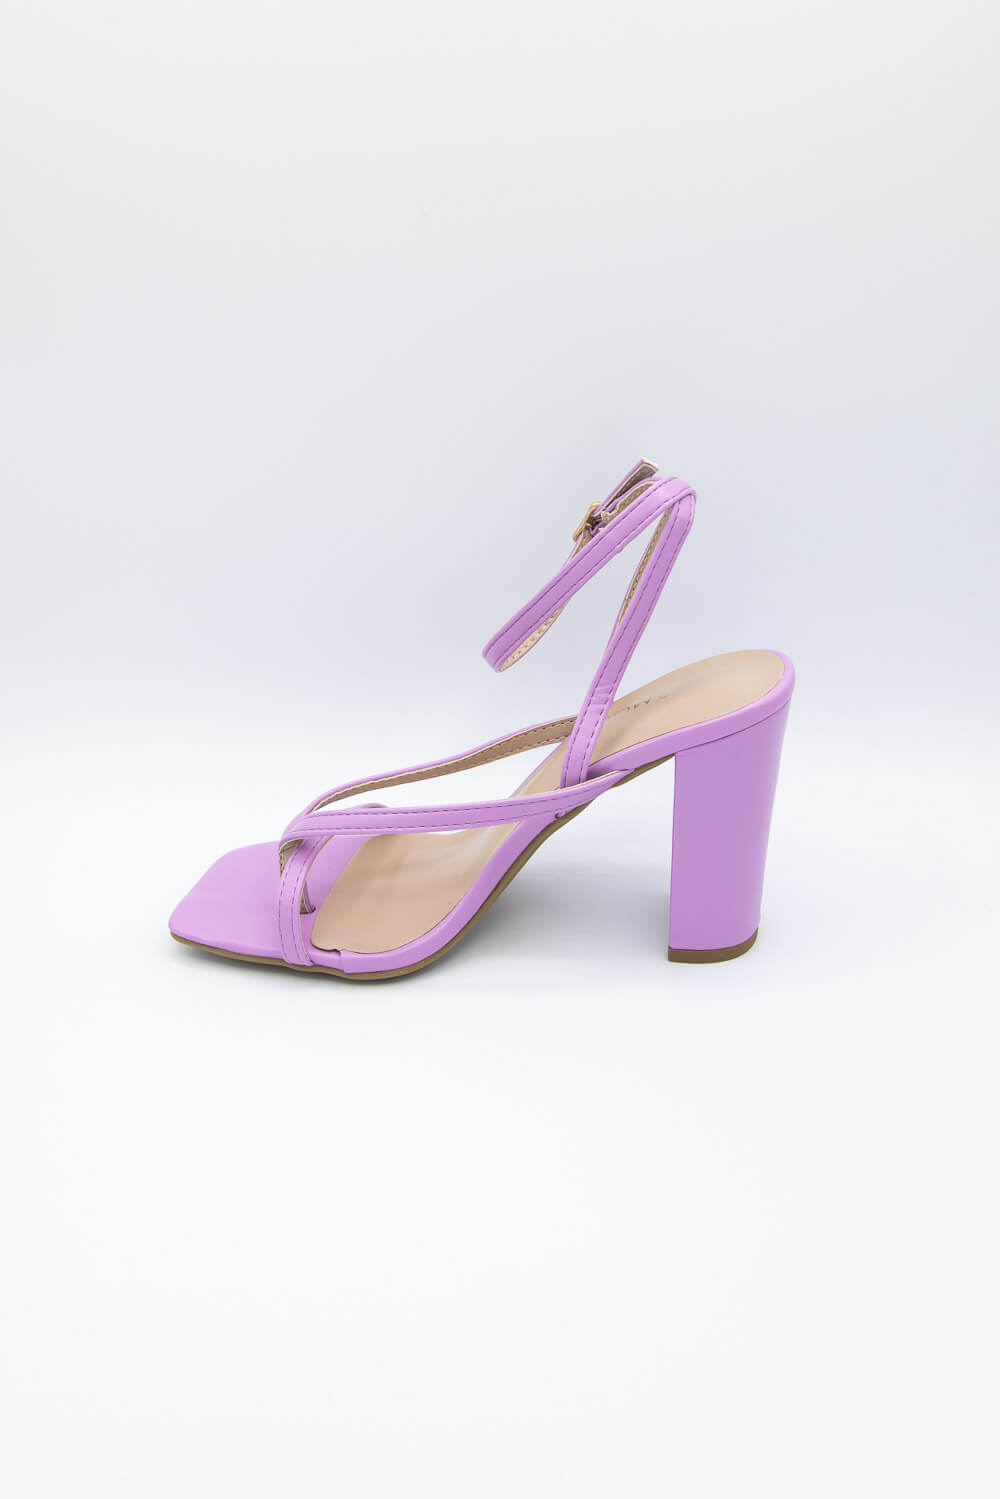 Dolce & Gabbana, Purple suede studded heel sandals - Unique Designer Pieces